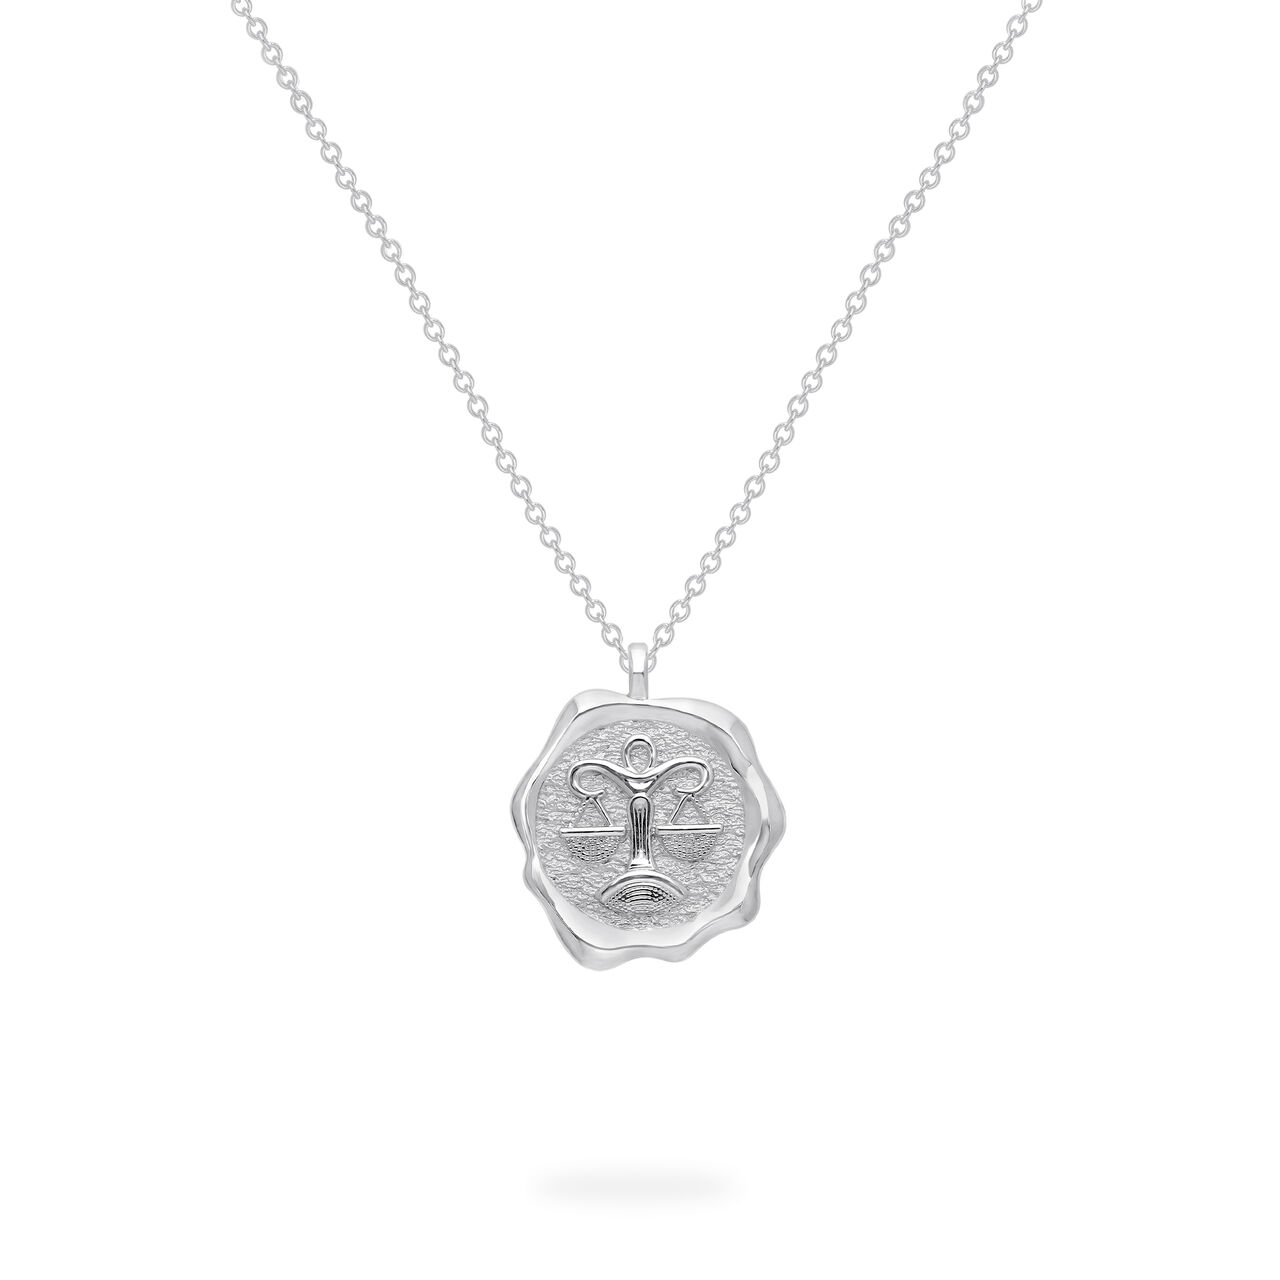 Zodiac Libra Necklace in Sterling Silver